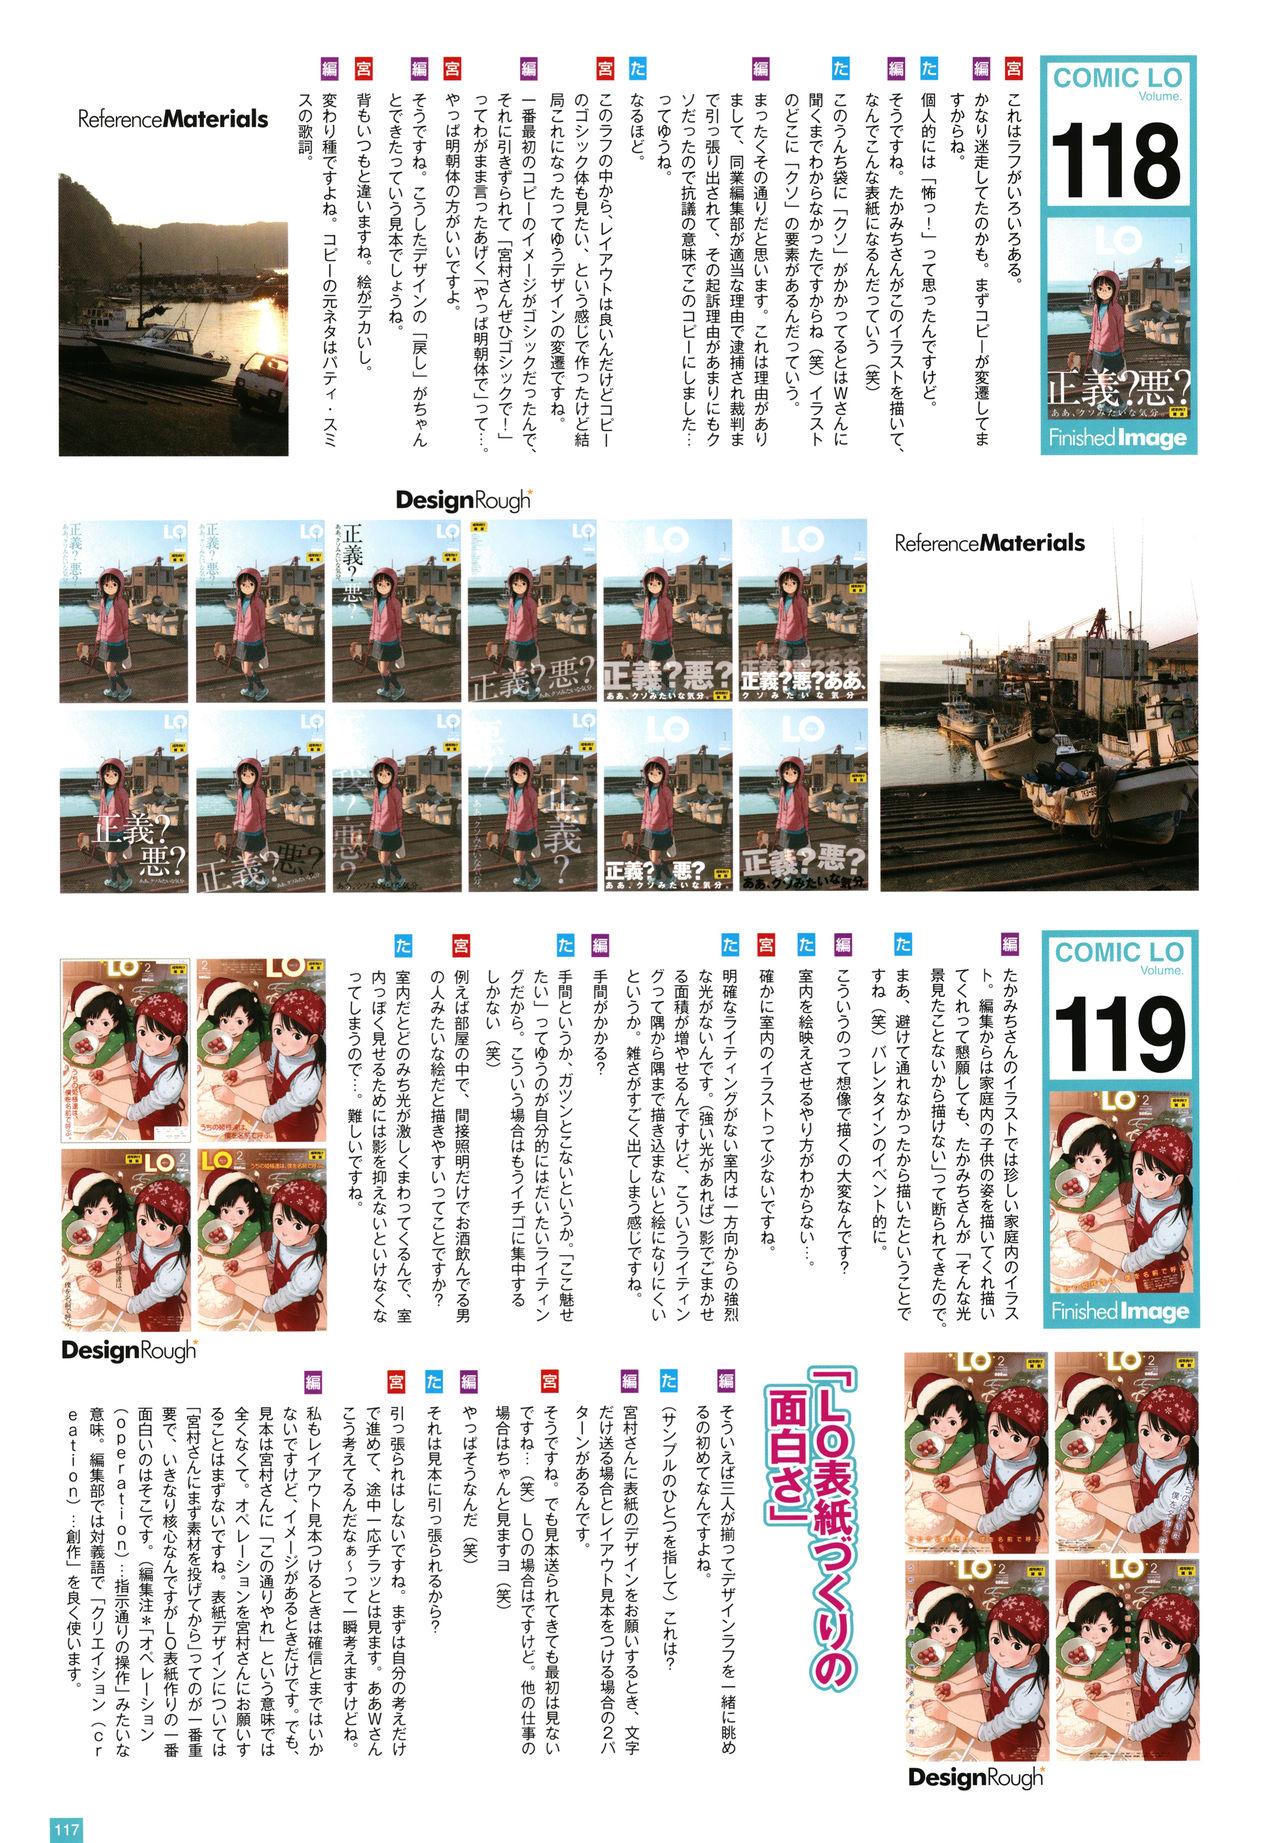 [Takamichi] LO Artbook 2-B TAKAMICHI LO-fi WORKS 119